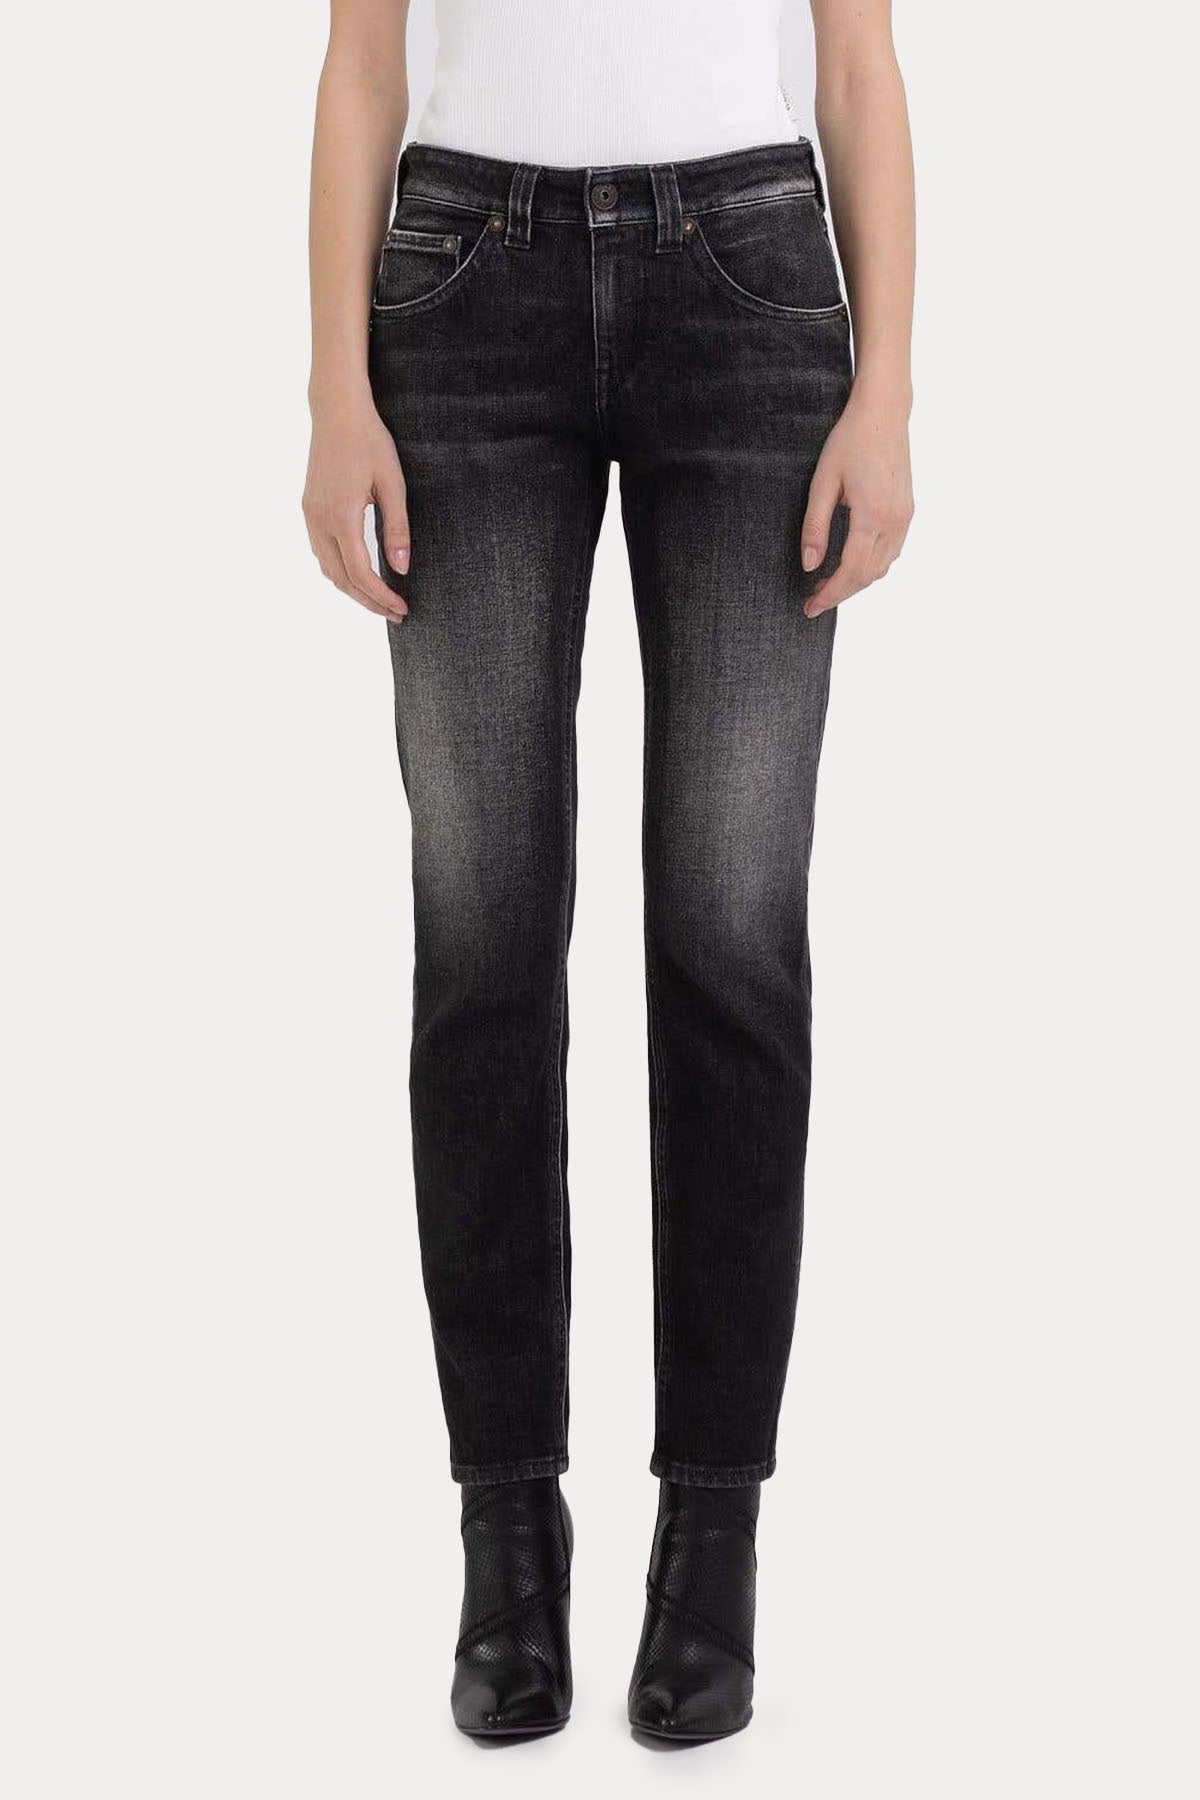 Replay Coralena Streç Slim Fit Jeans-Libas Trendy Fashion Store